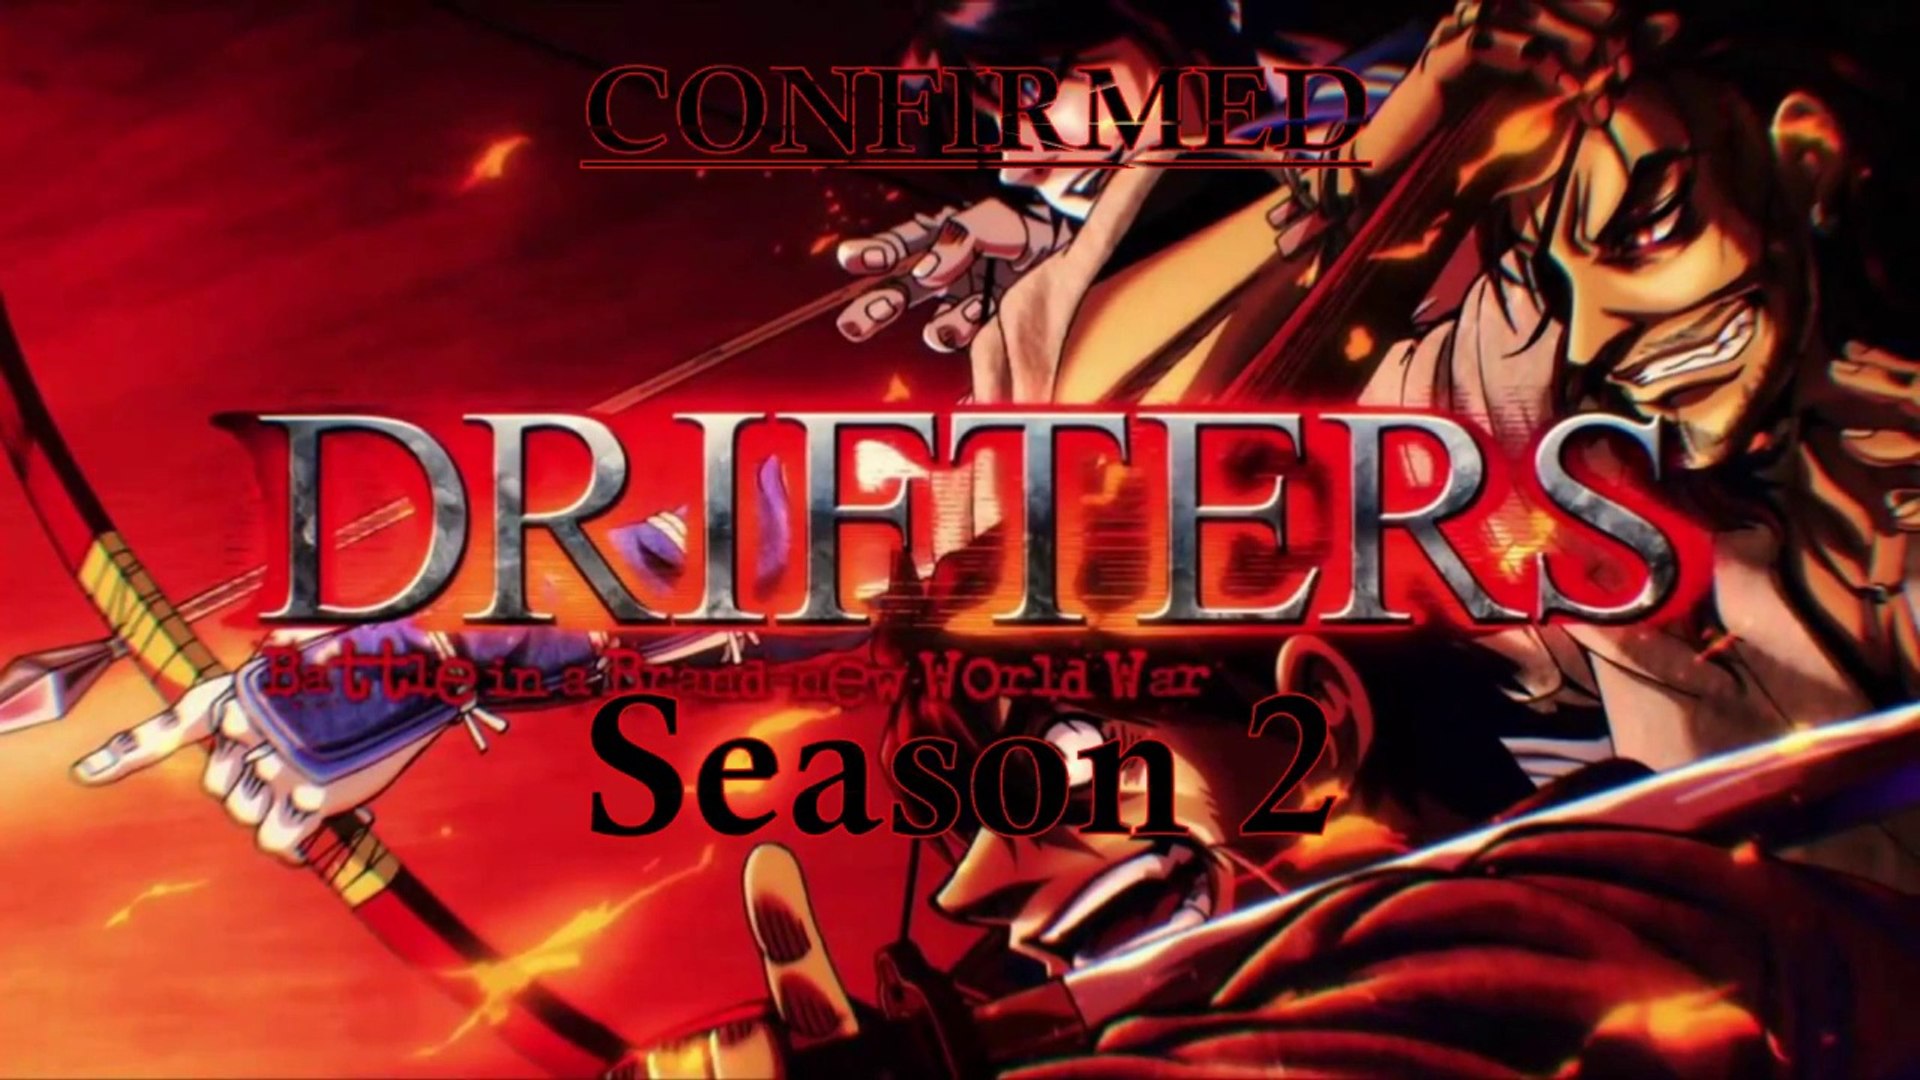 Release date of the anime Drifters Season 2